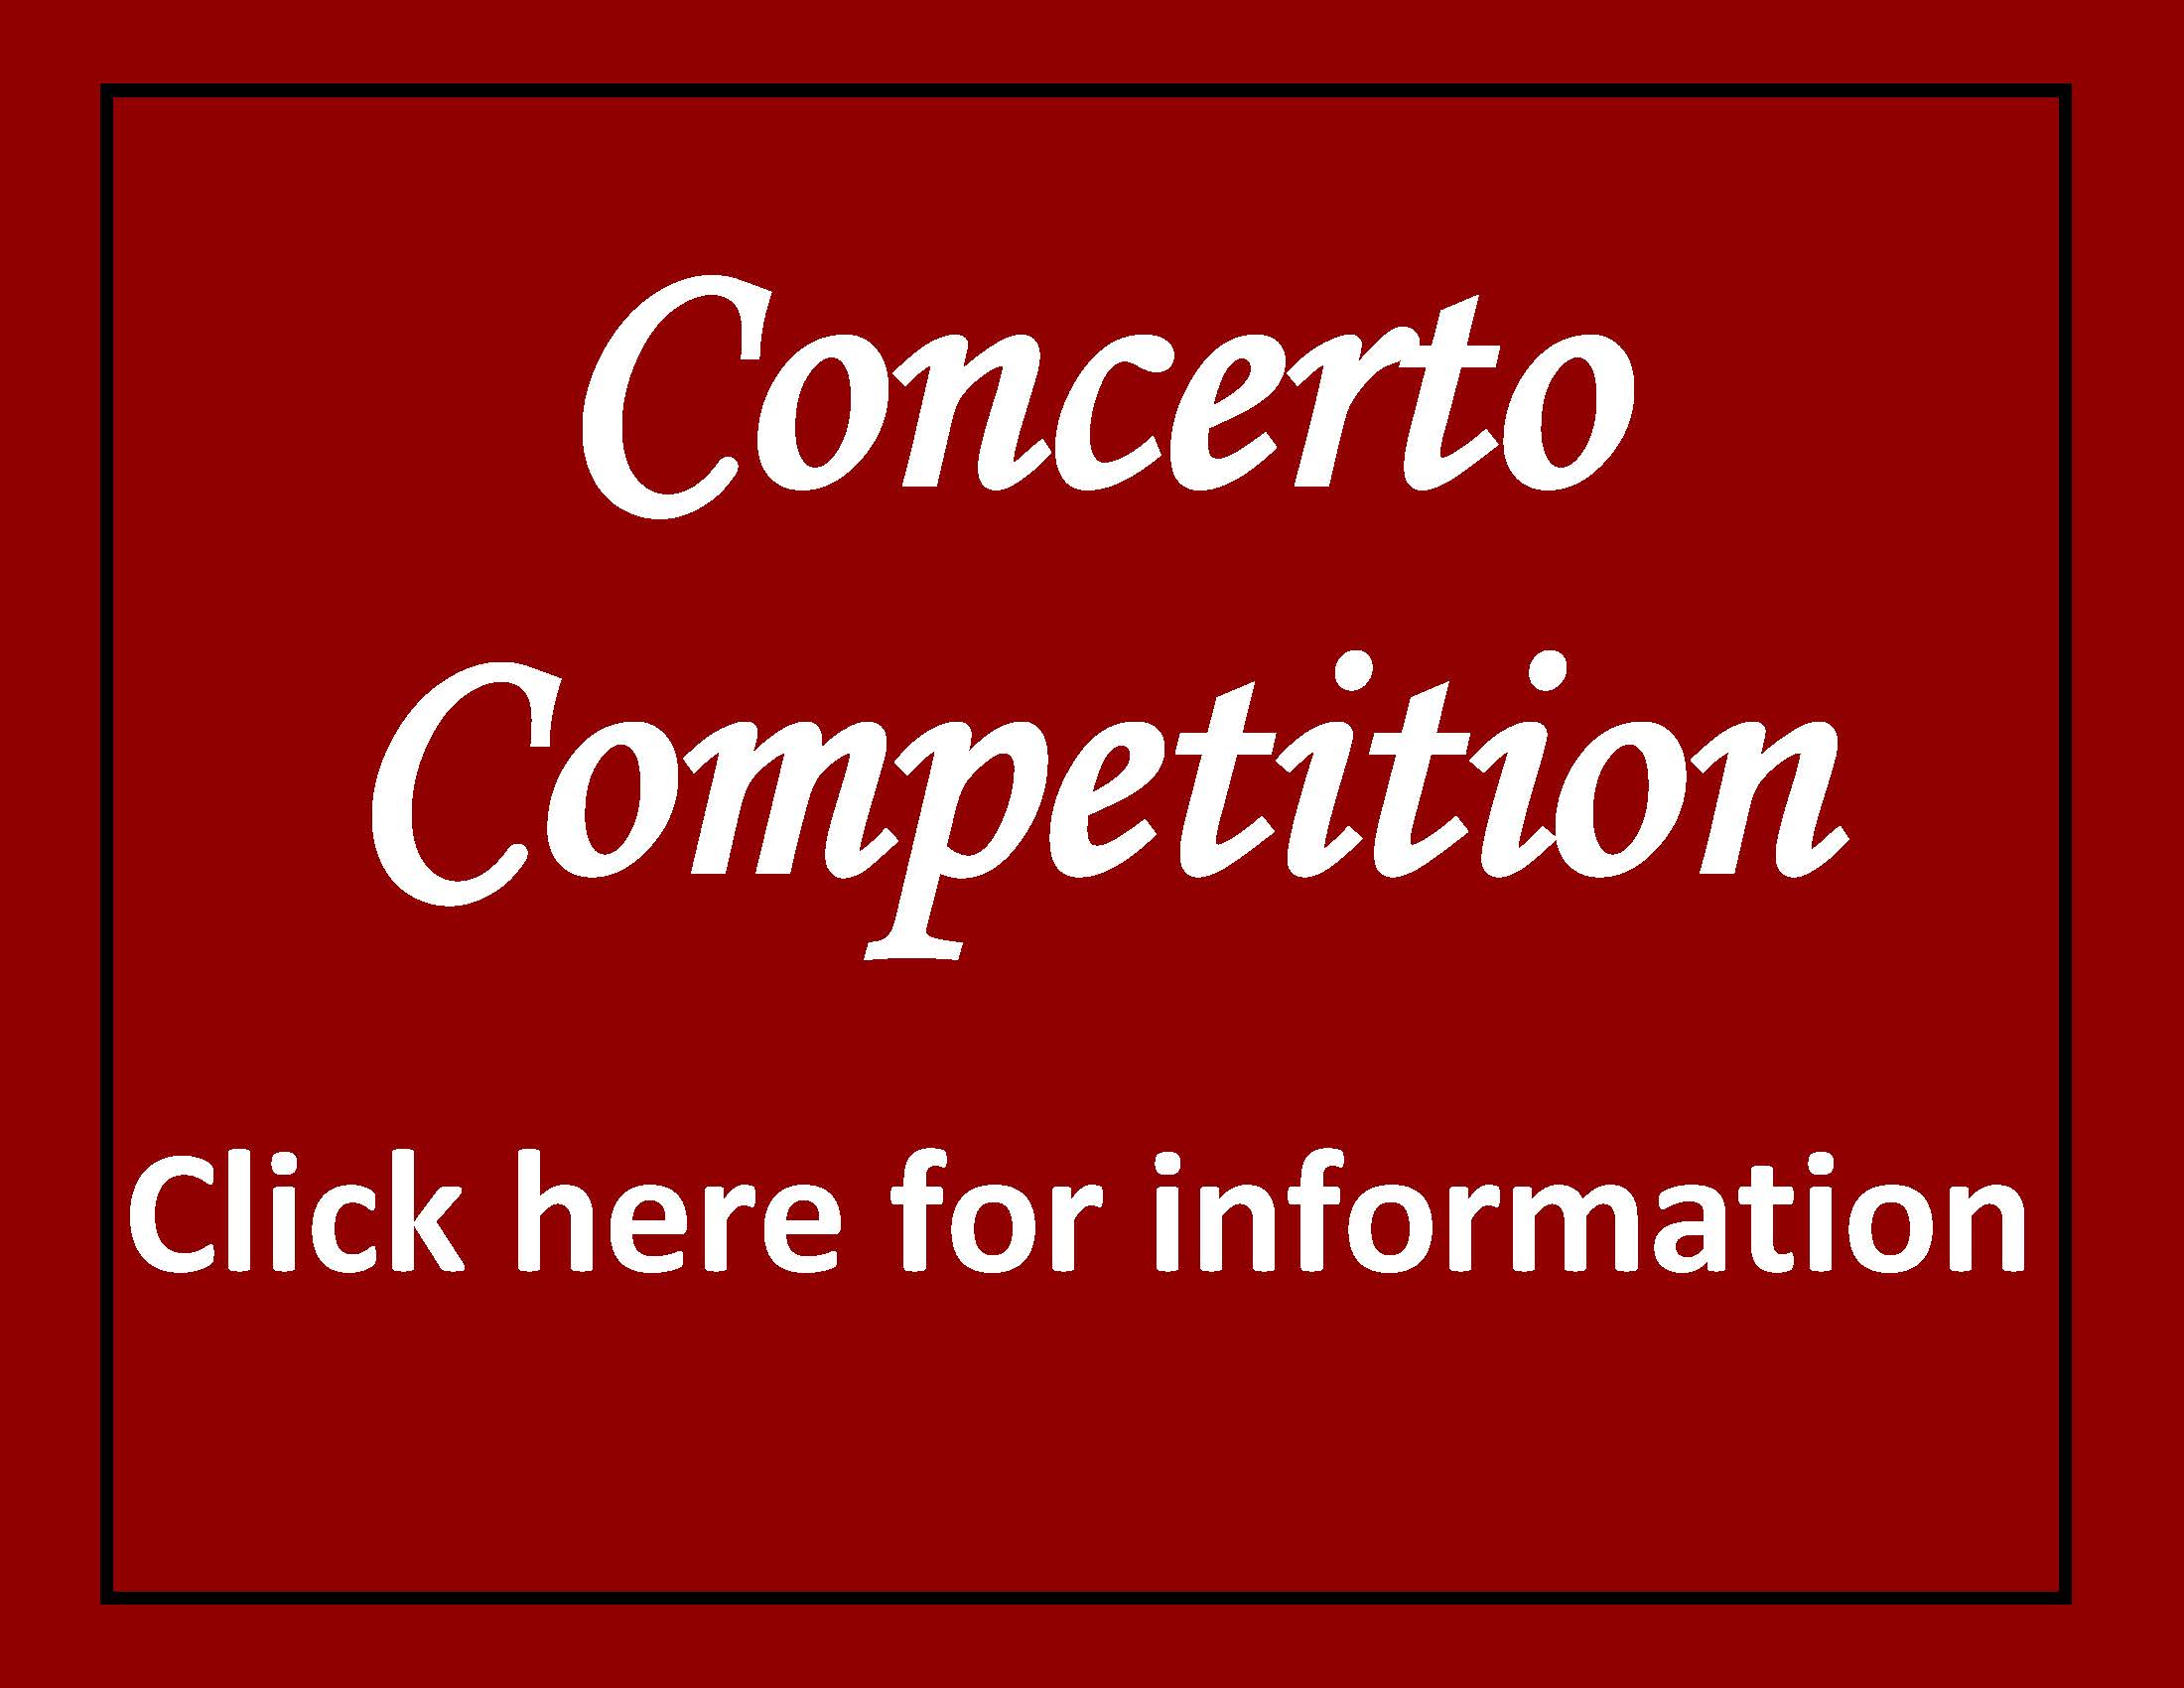 Concerto Competition Details